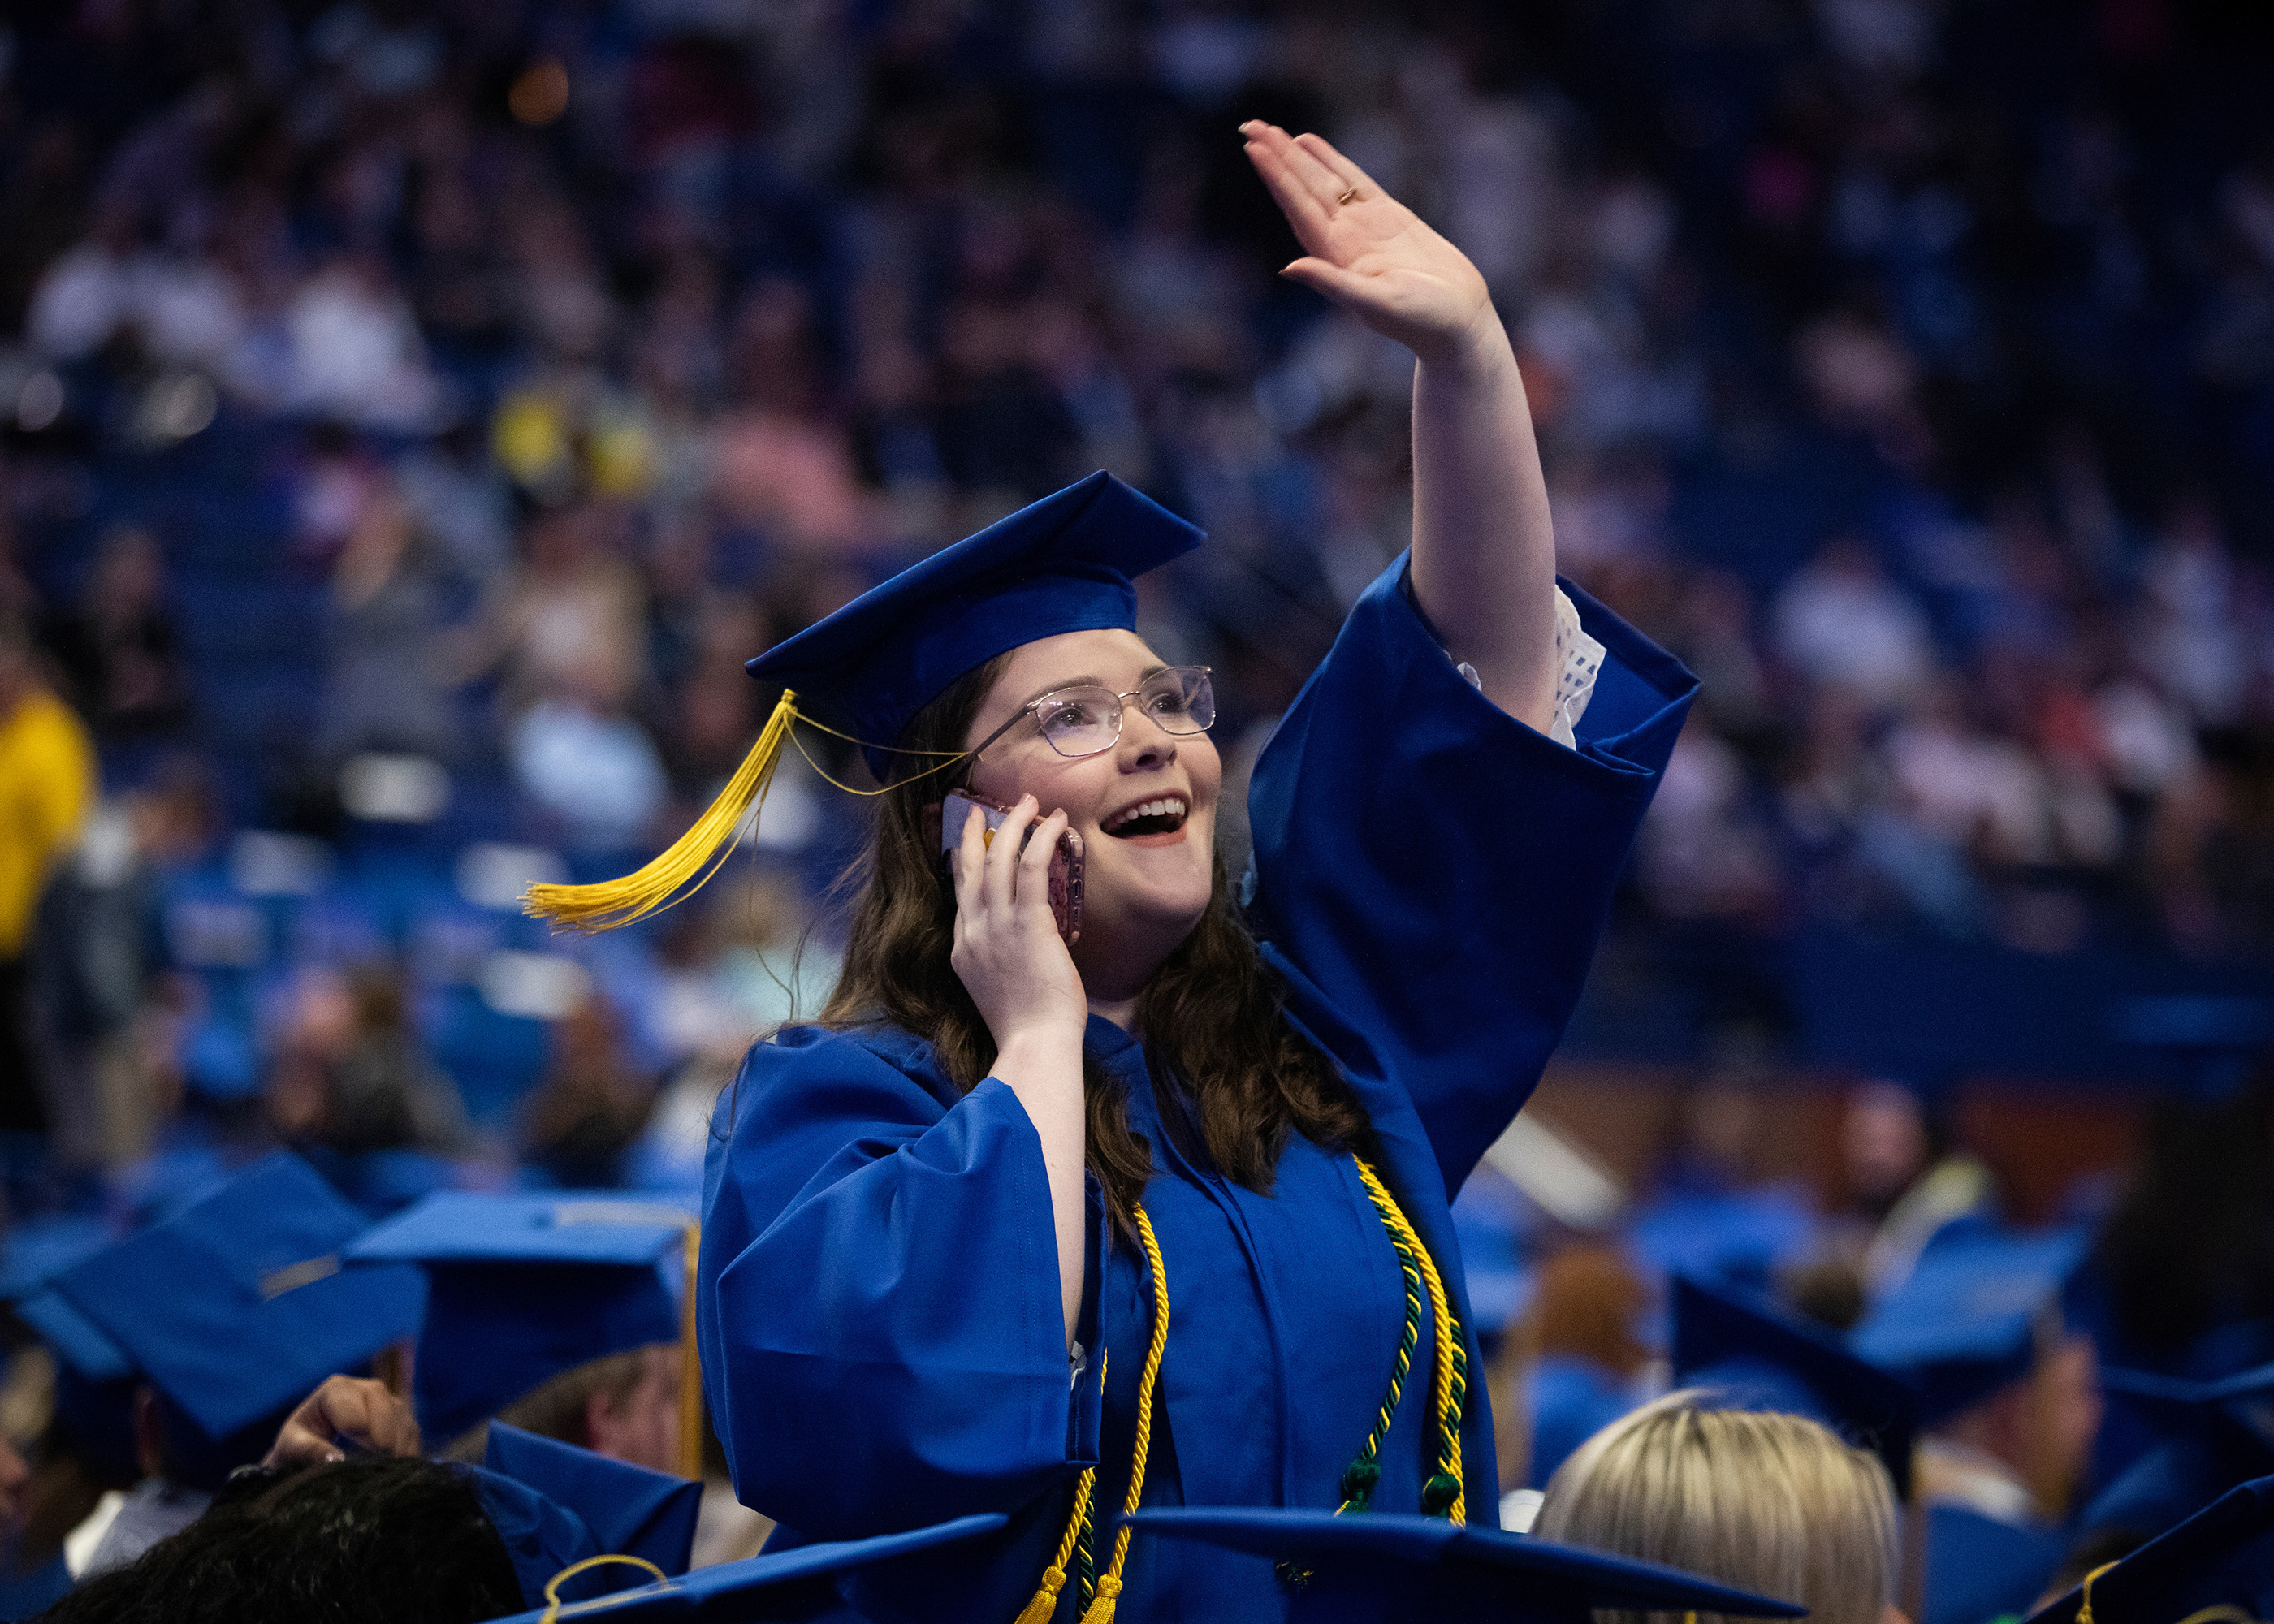 Student at graduation waving to family.